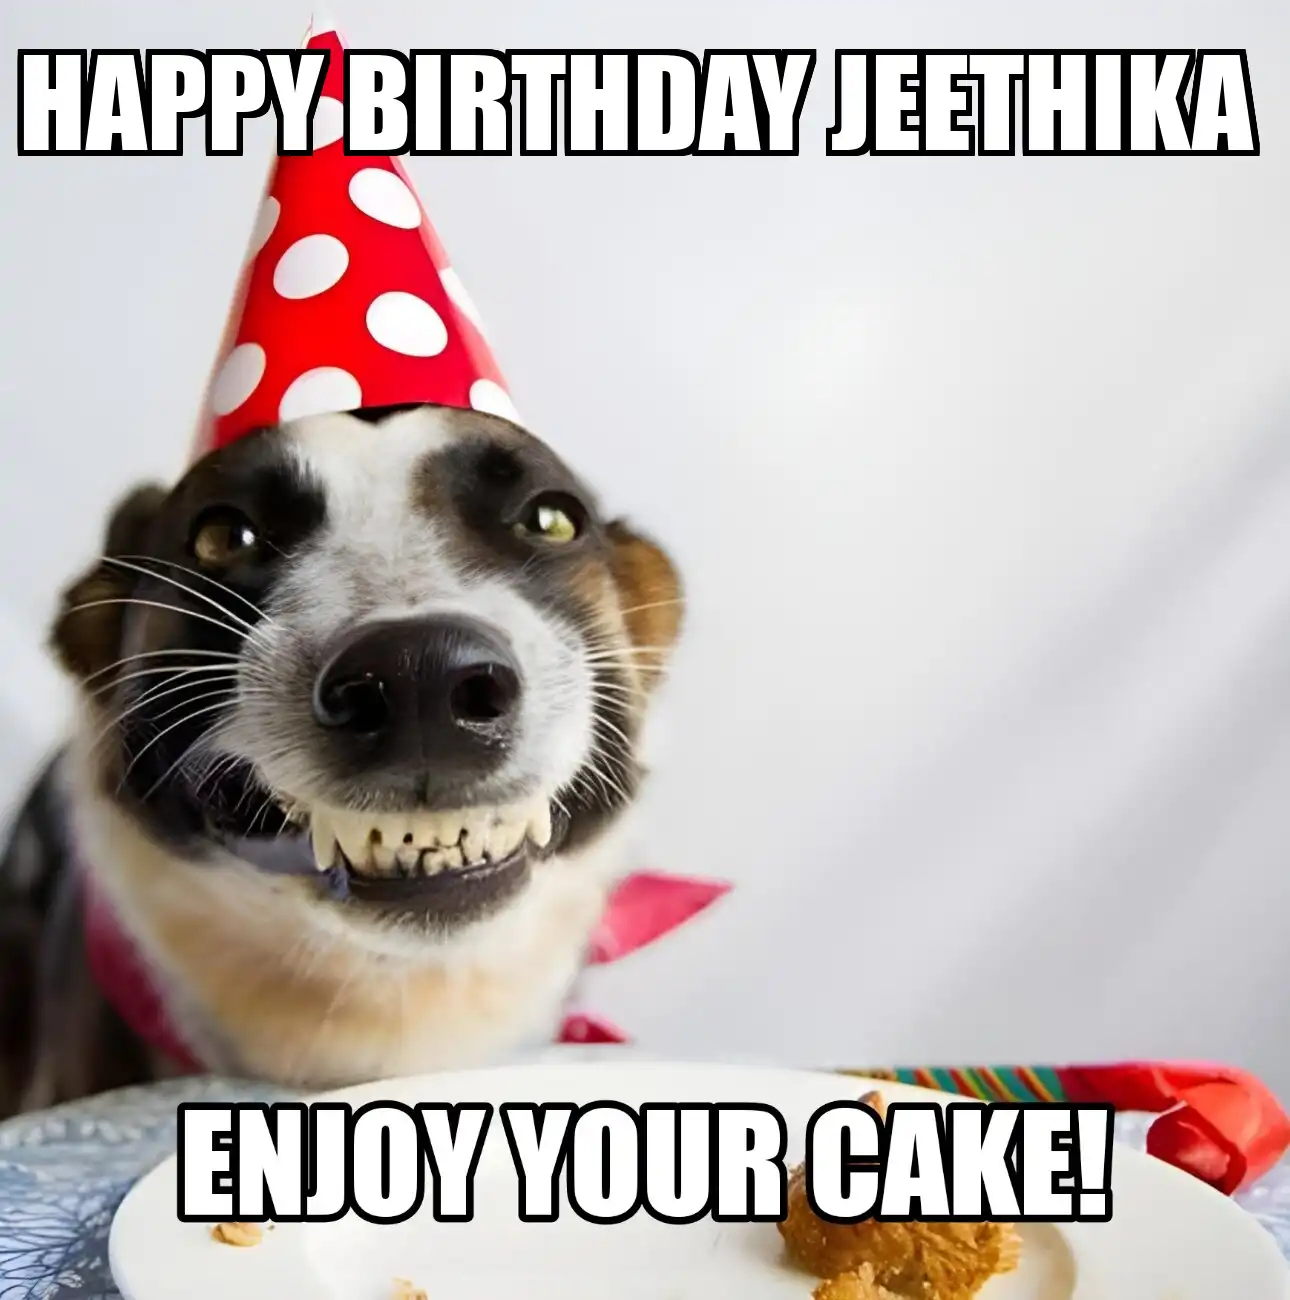 Happy Birthday Jeethika Enjoy Your Cake Dog Meme